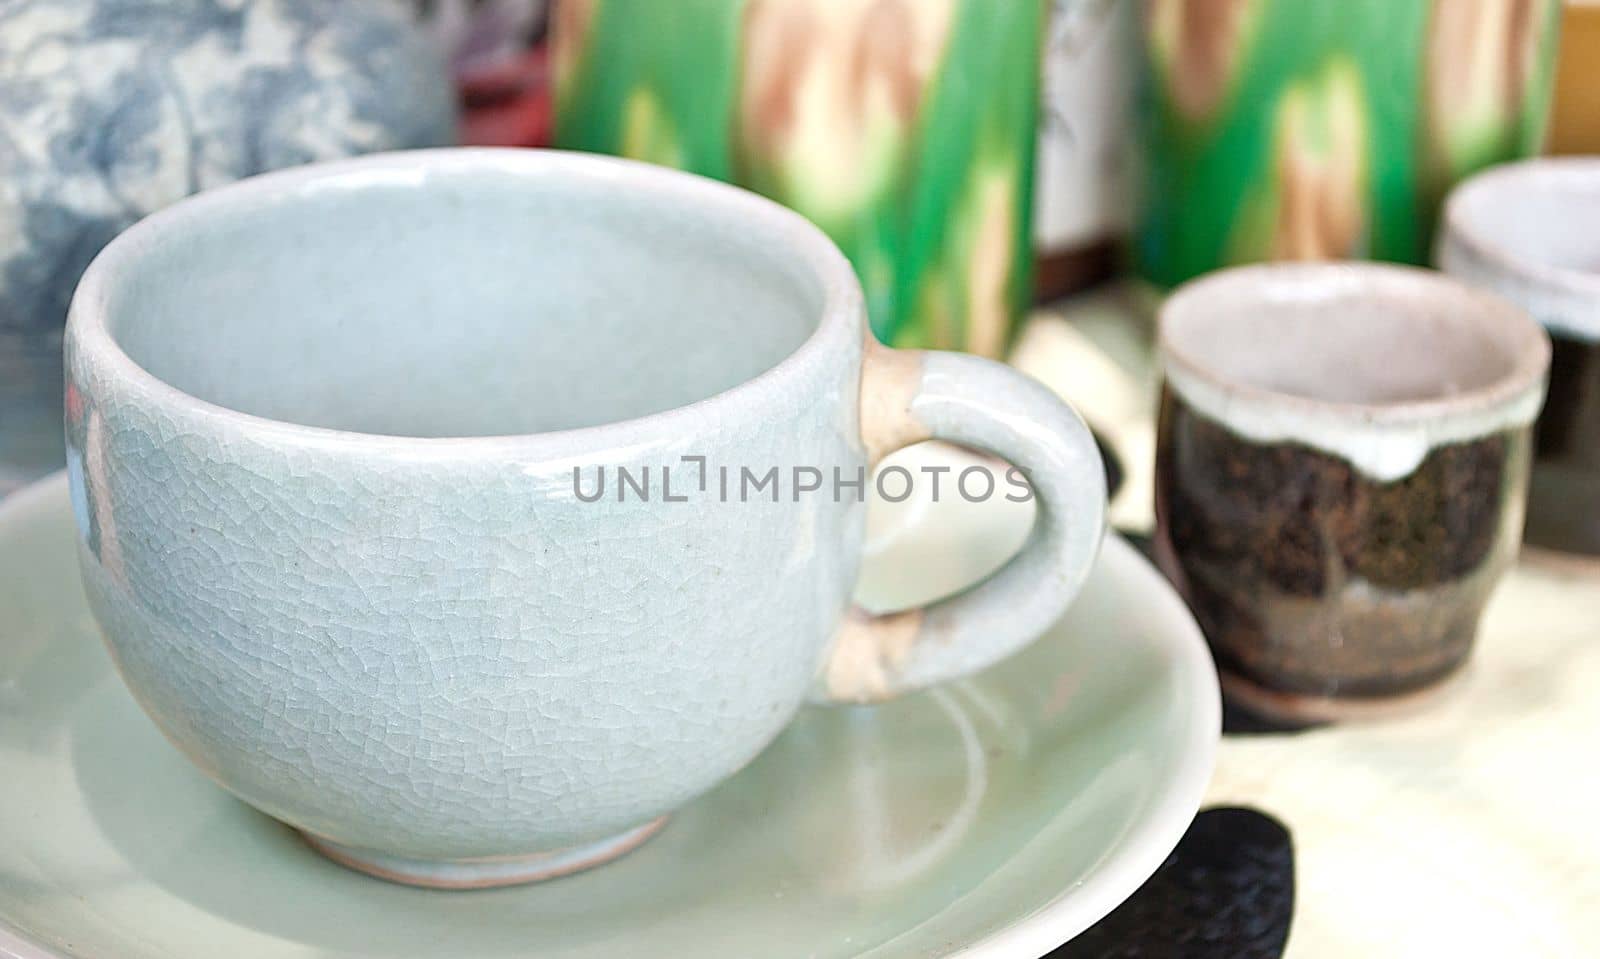 enamel plates, bowls and mugs stacked